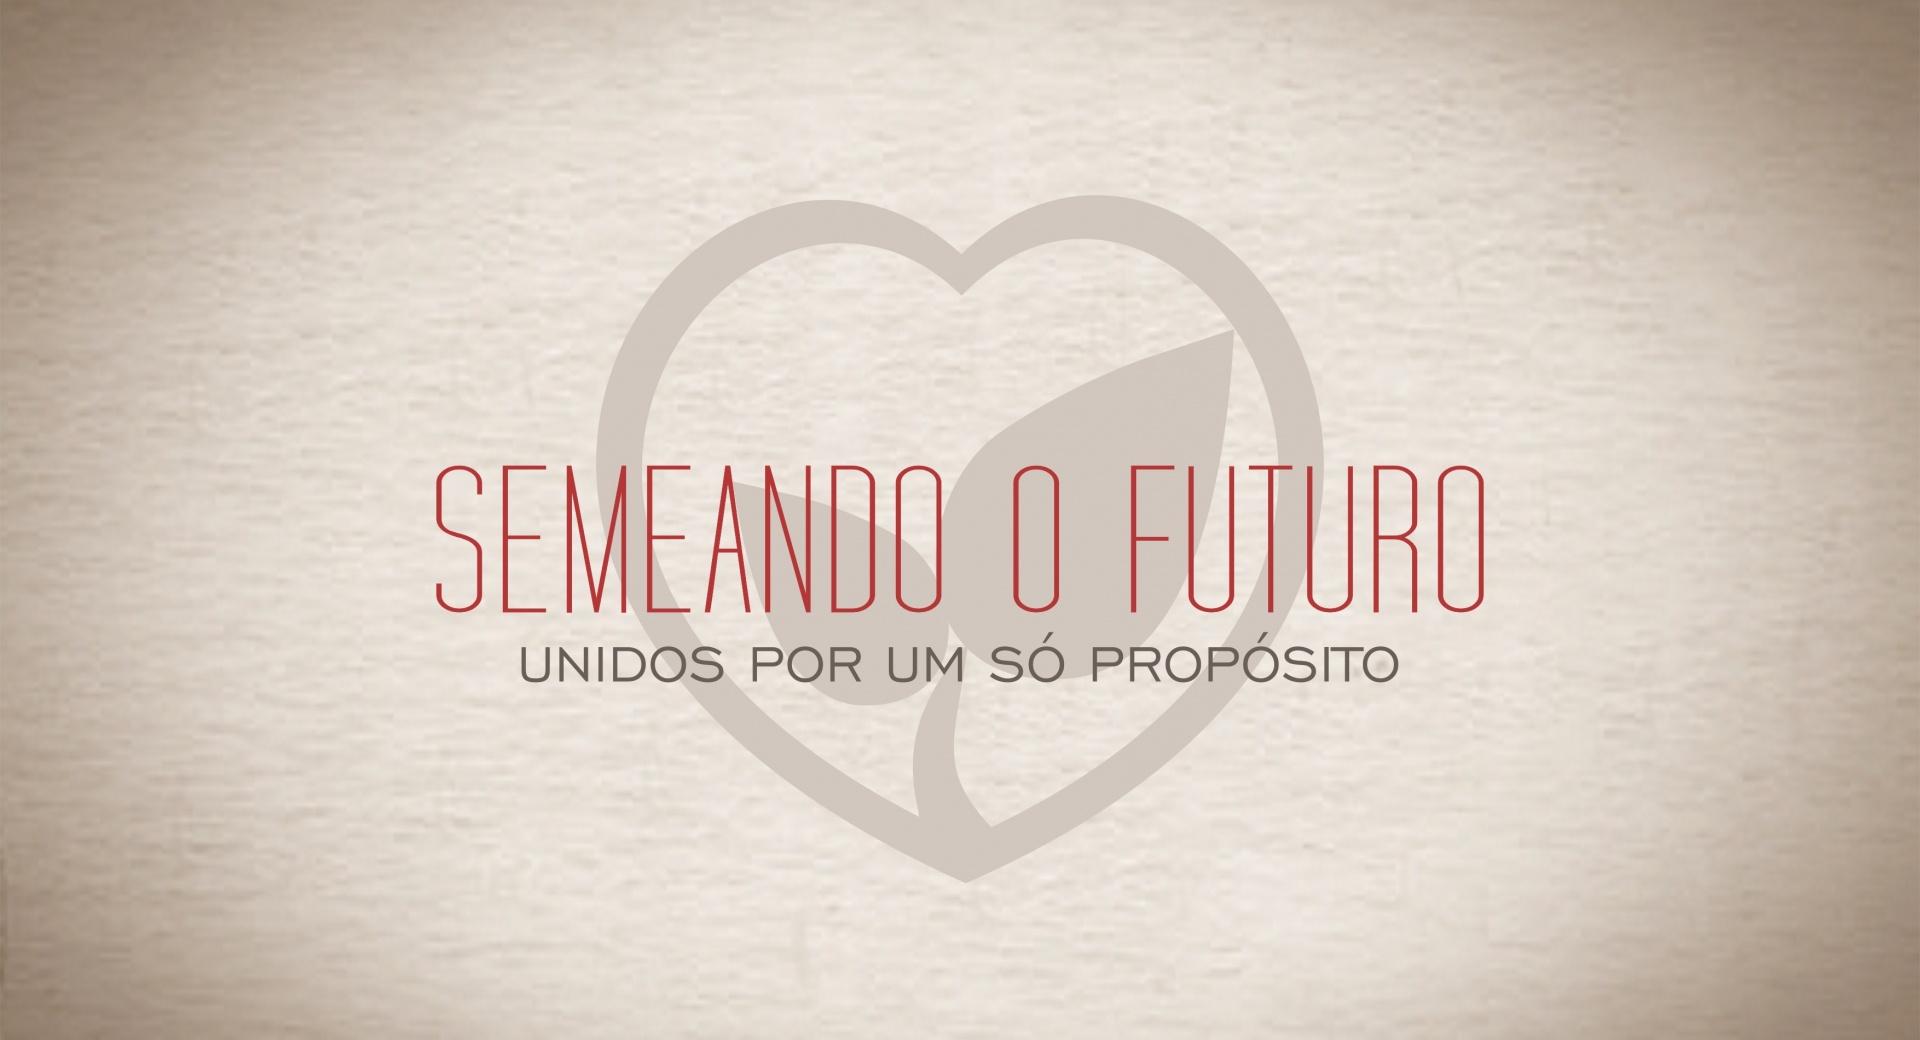 Banda Semeando o Futuro at 320 x 480 iPhone size wallpapers HD quality